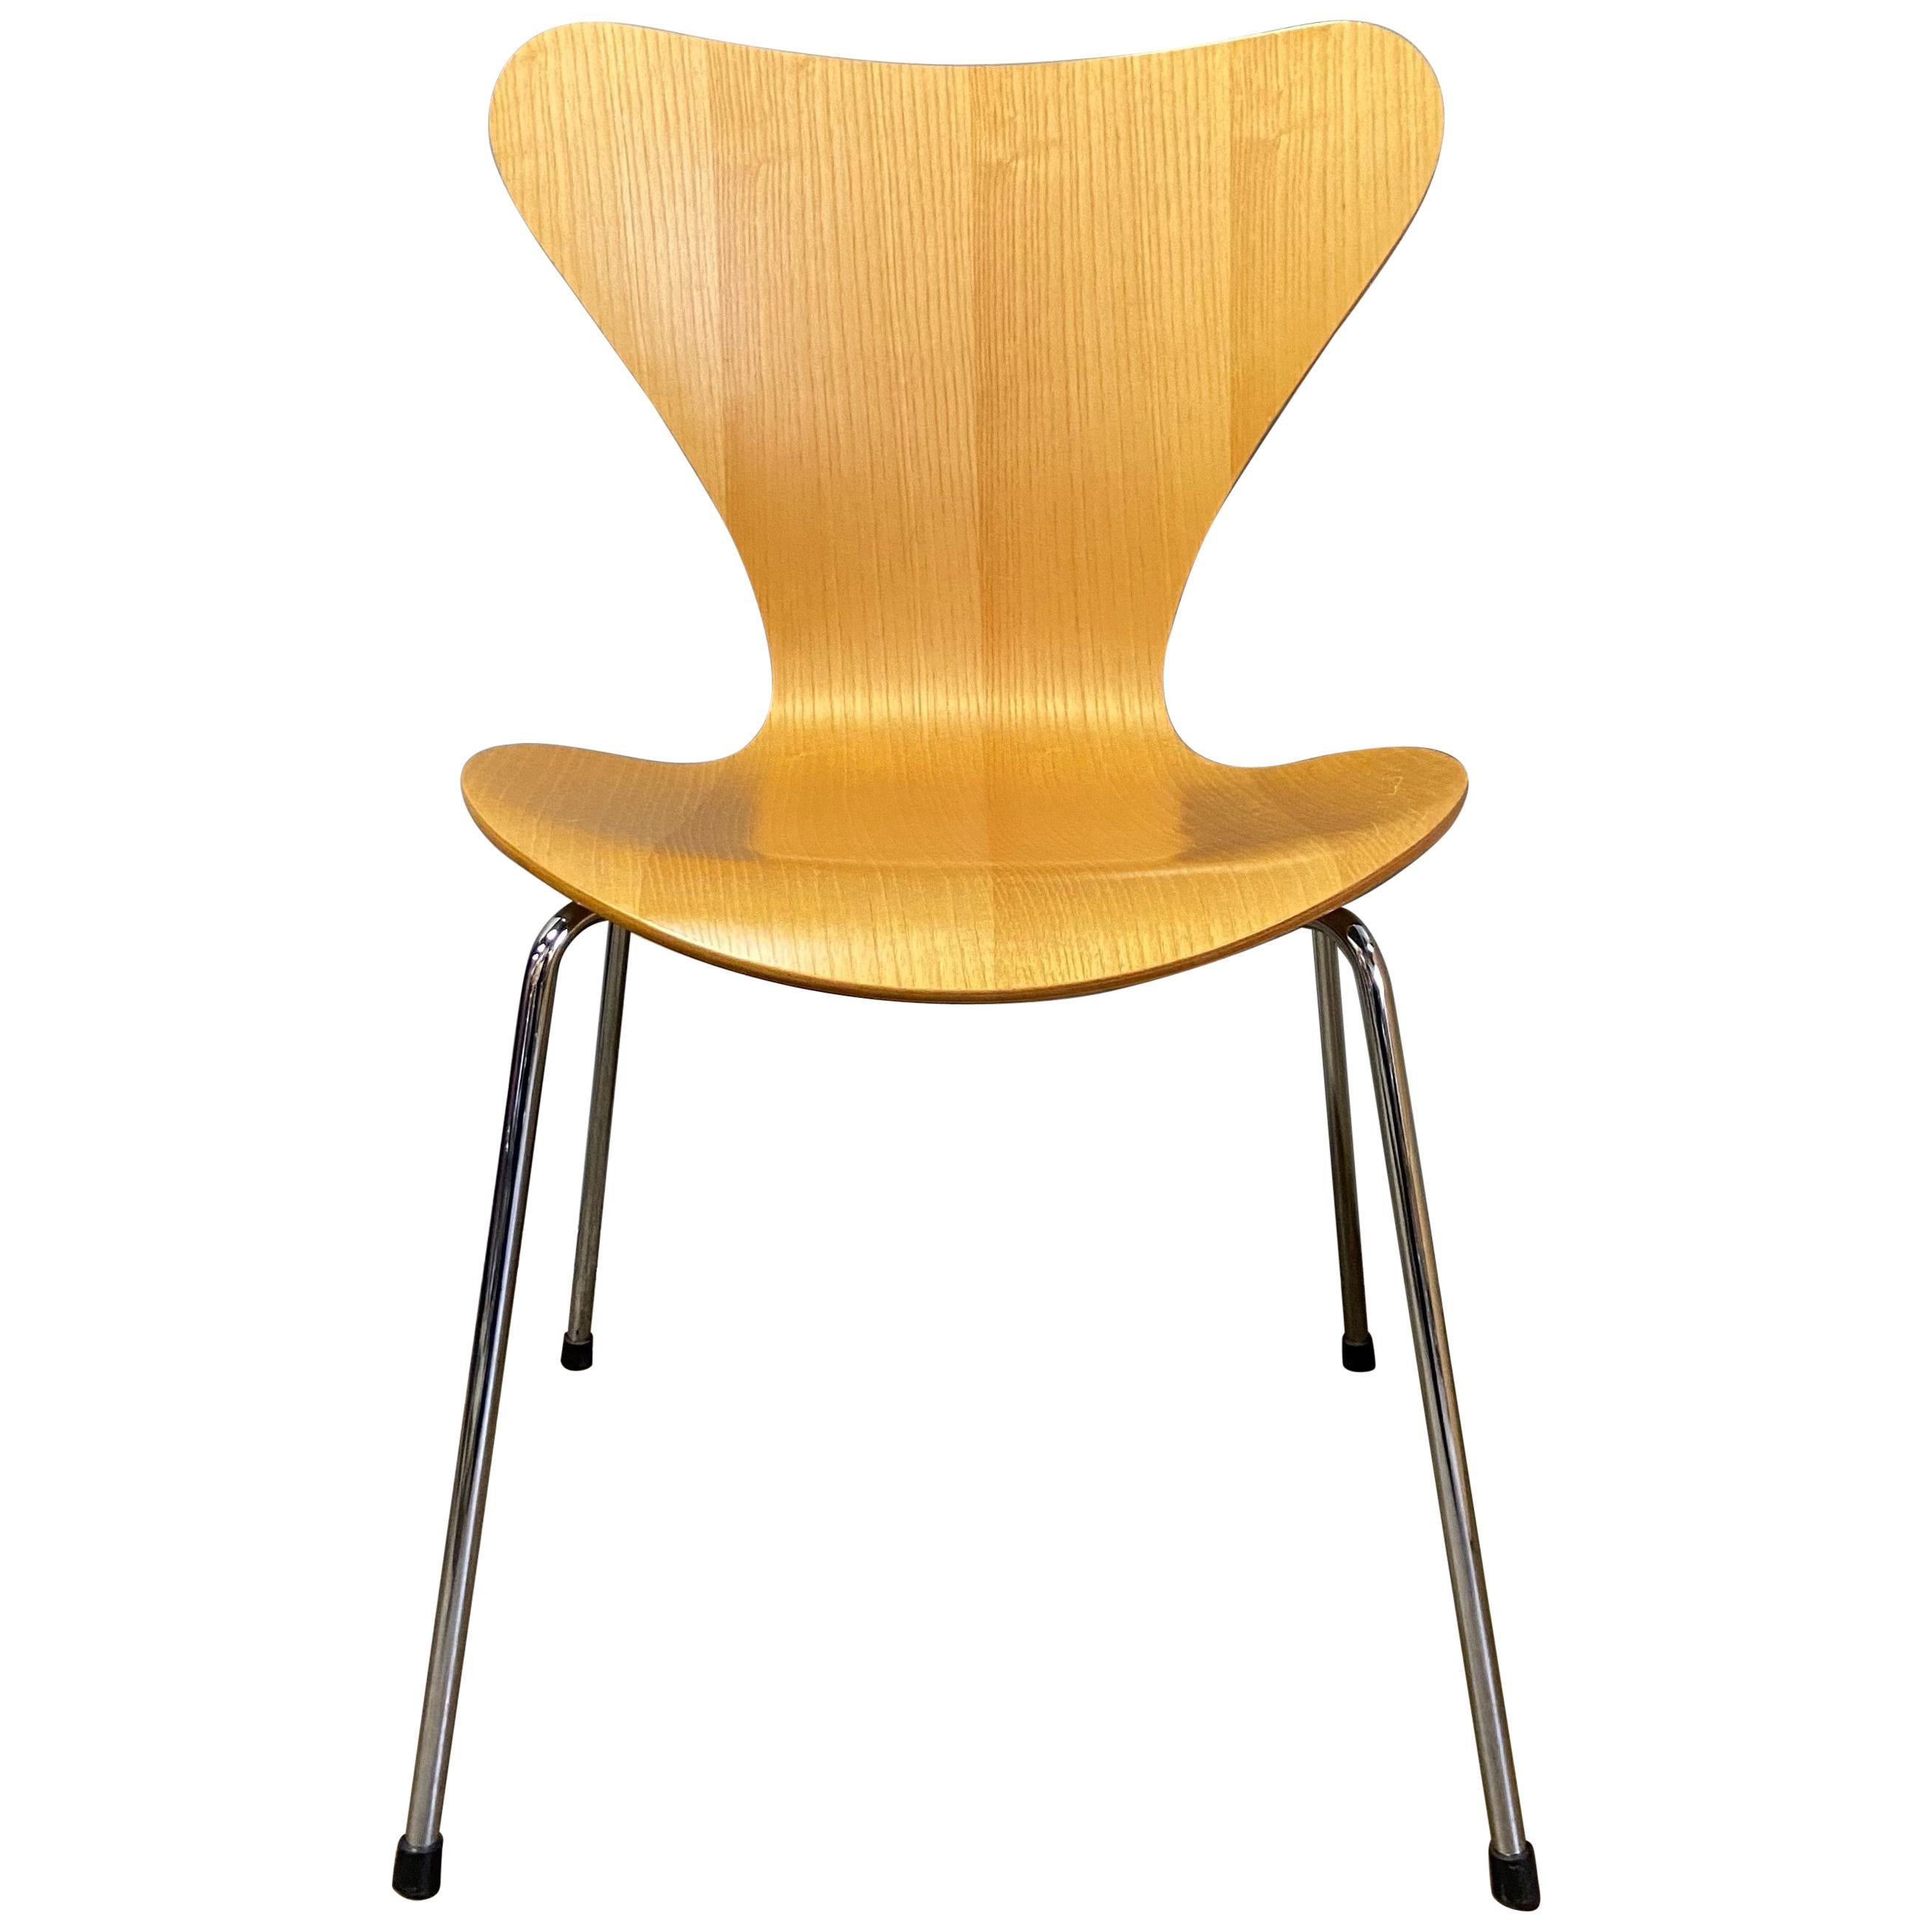 Midcentury Arne Jacobsen Series 7 Chairs